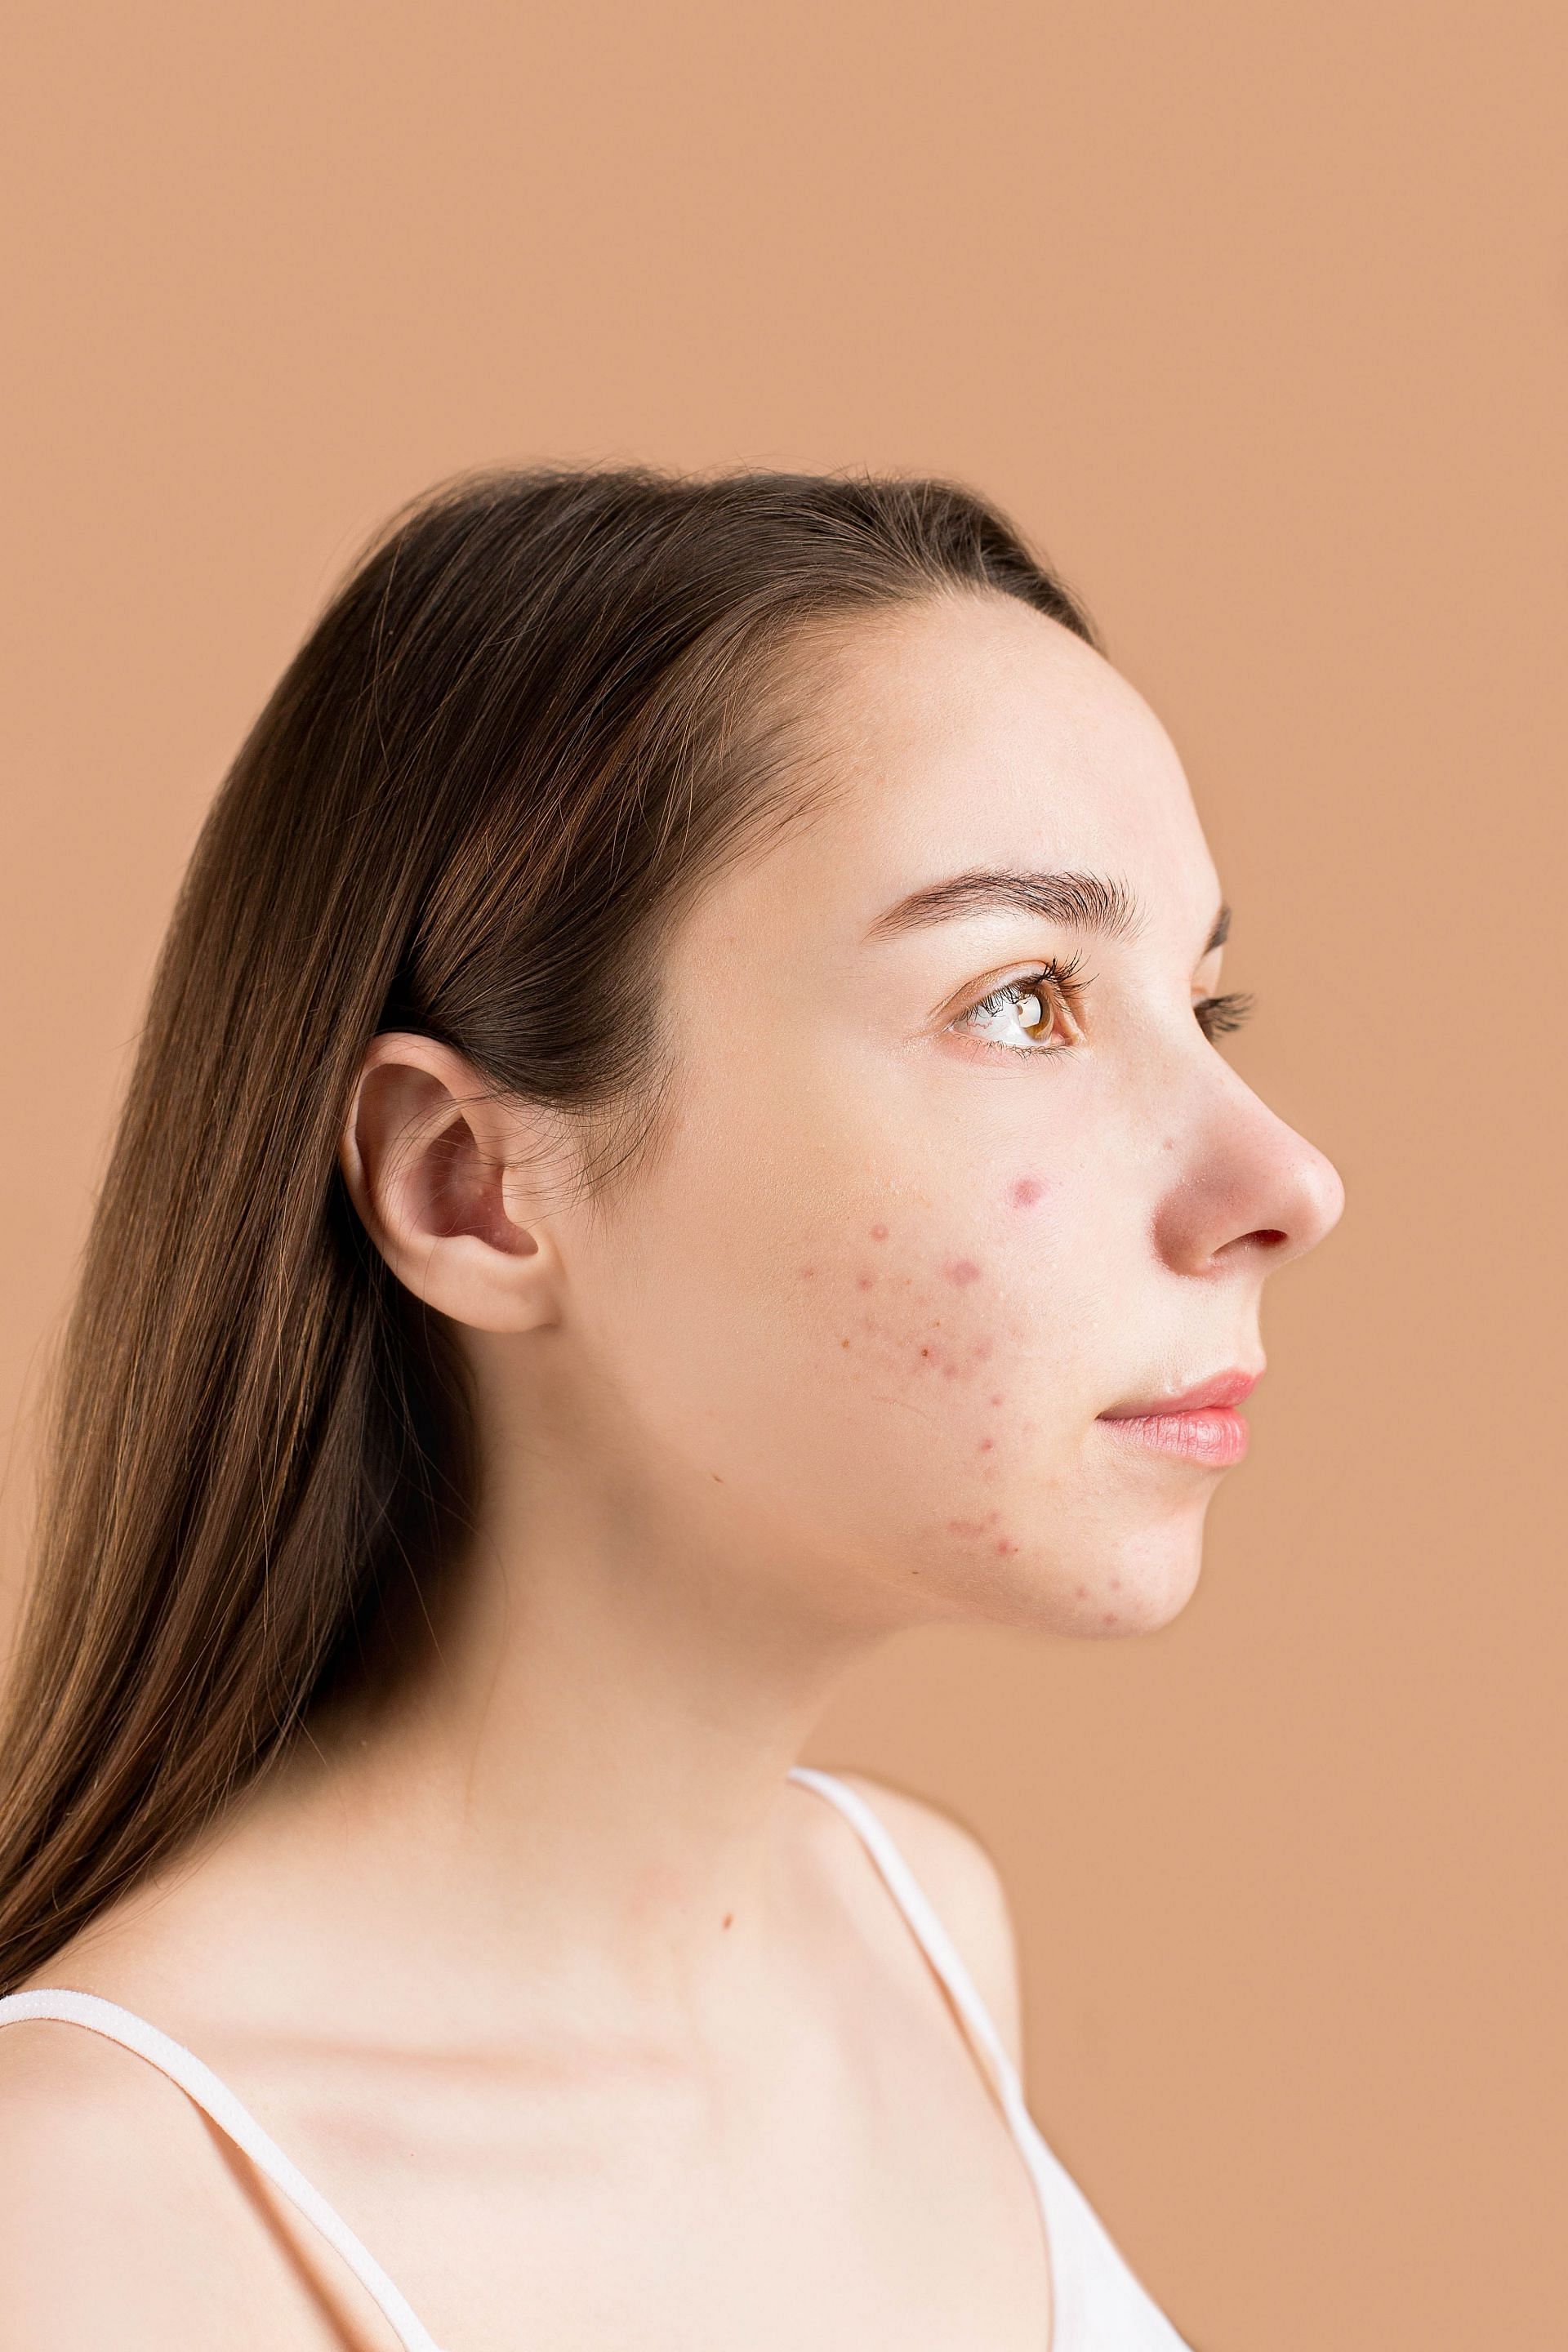 How BHA Works on Acne-Prone Skin. (Image via Pexels)